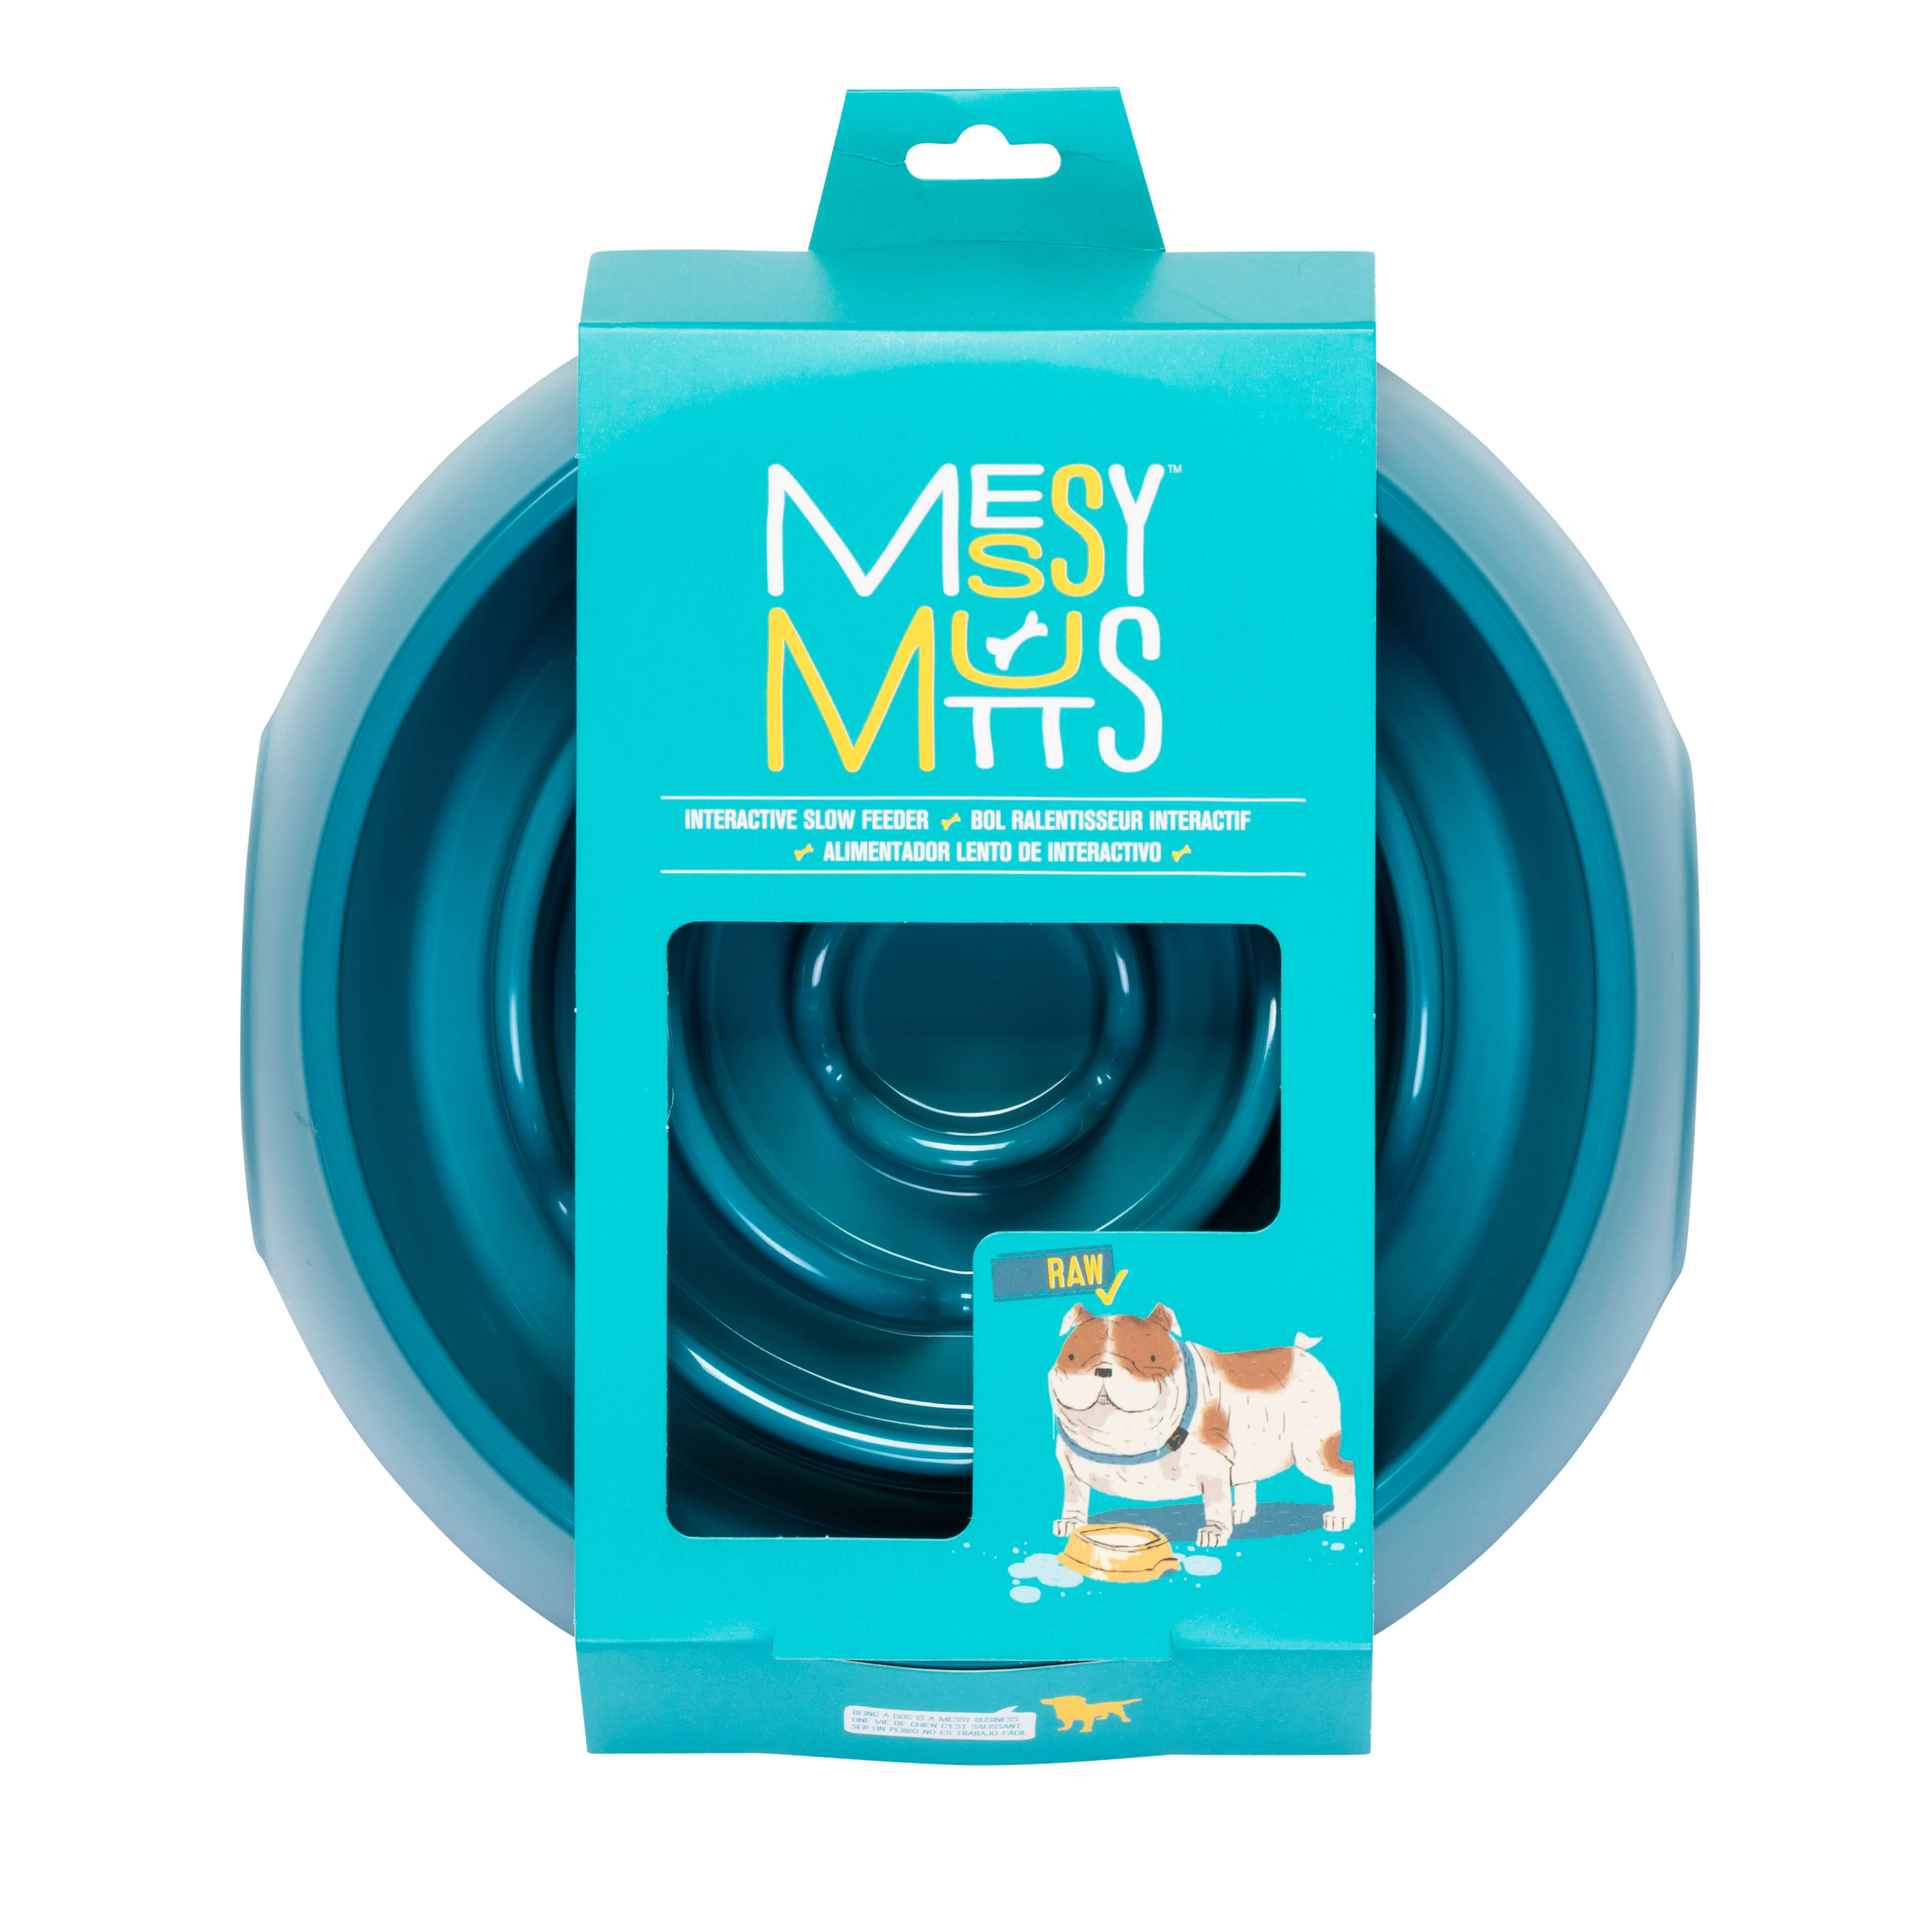 Messy Mutt slow feeder blue in package